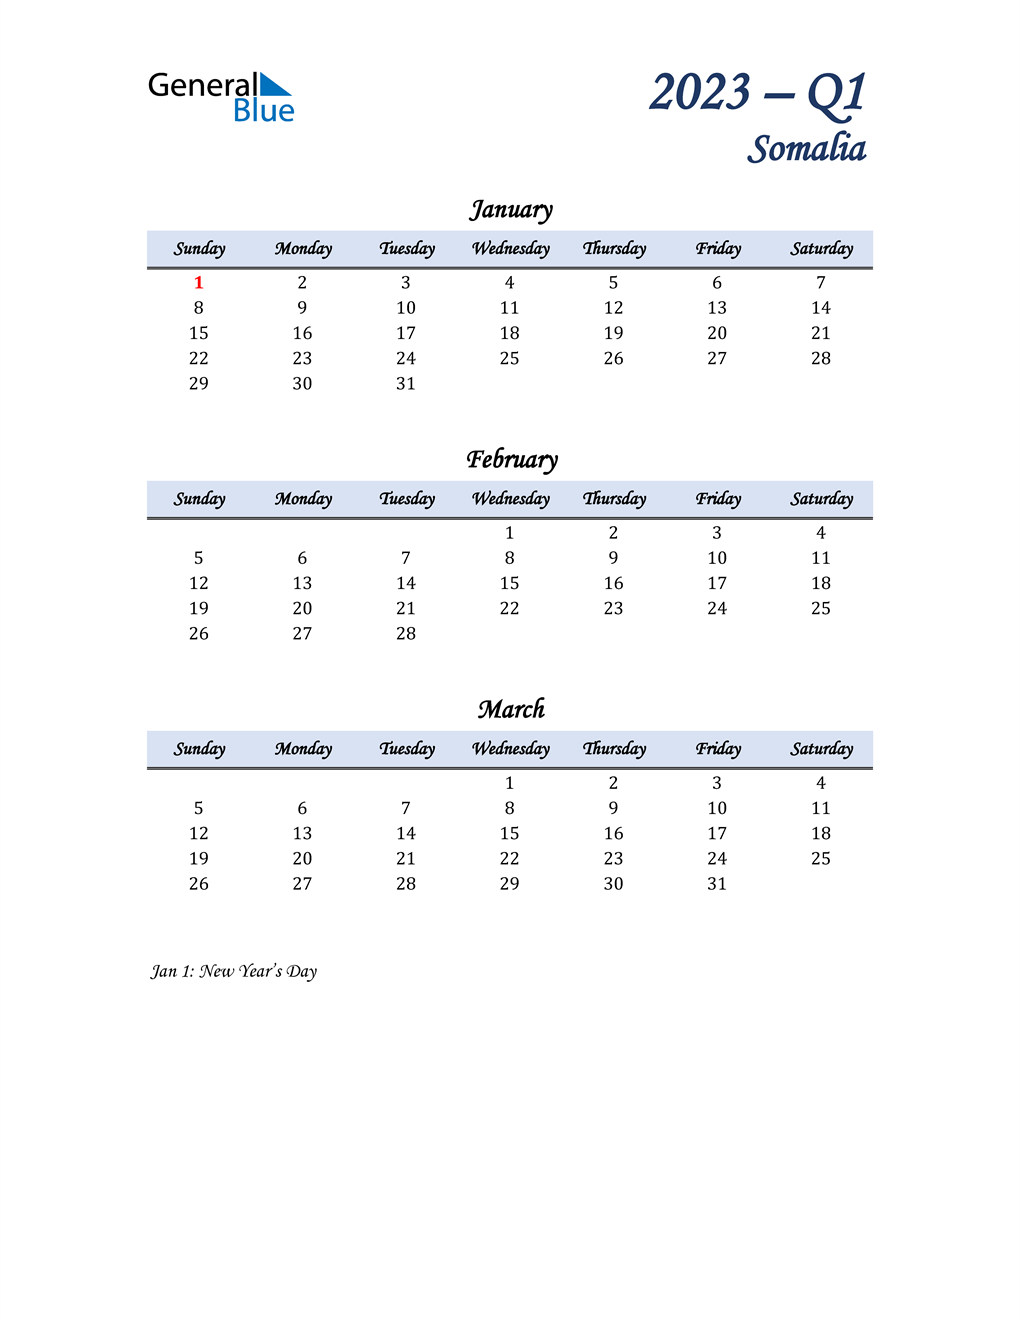  January, February, and March Calendar for Somalia